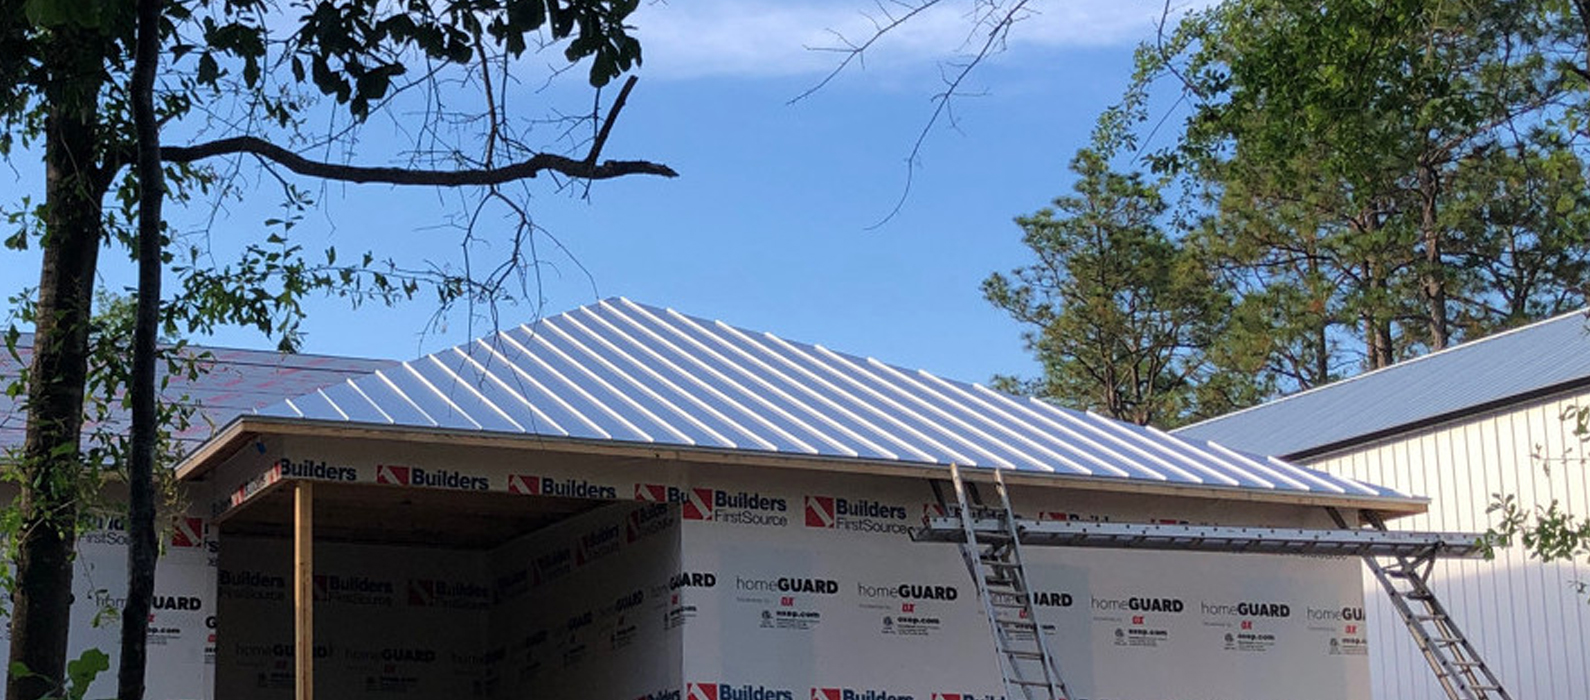 Rennison Roofing metal roof install in progress